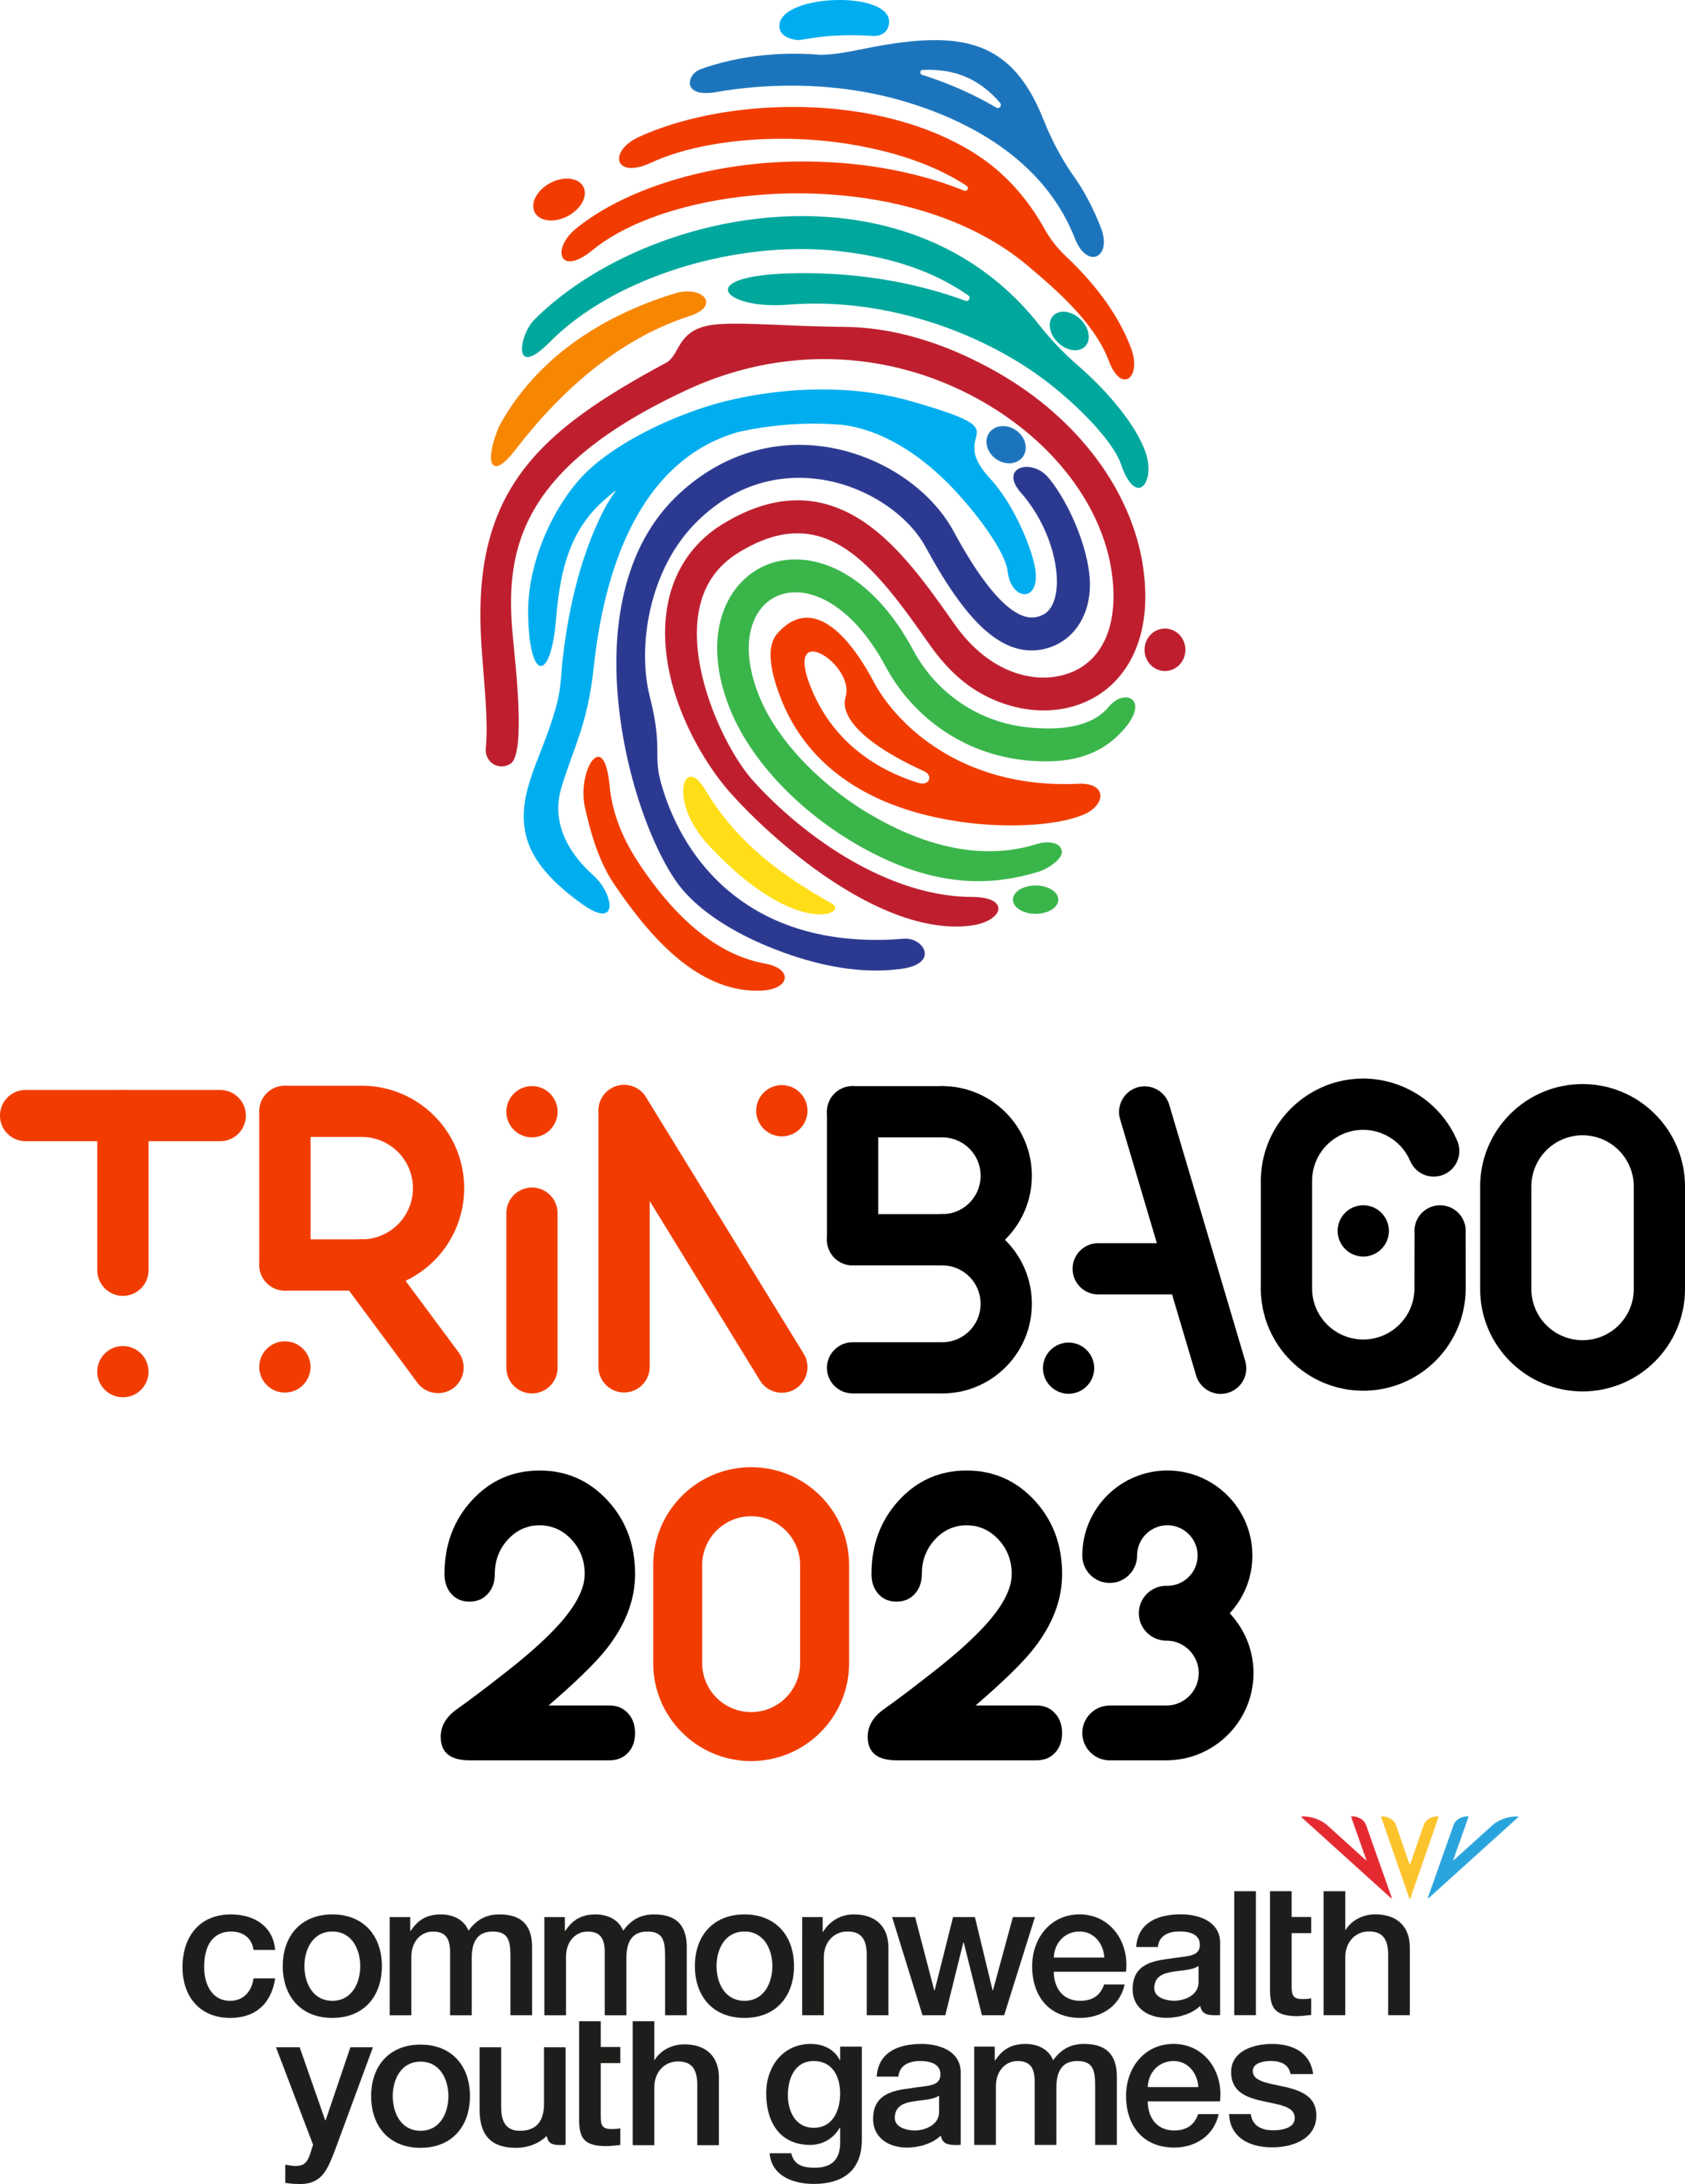 Trinbago 2023 Commonwealth Youth Games Logo